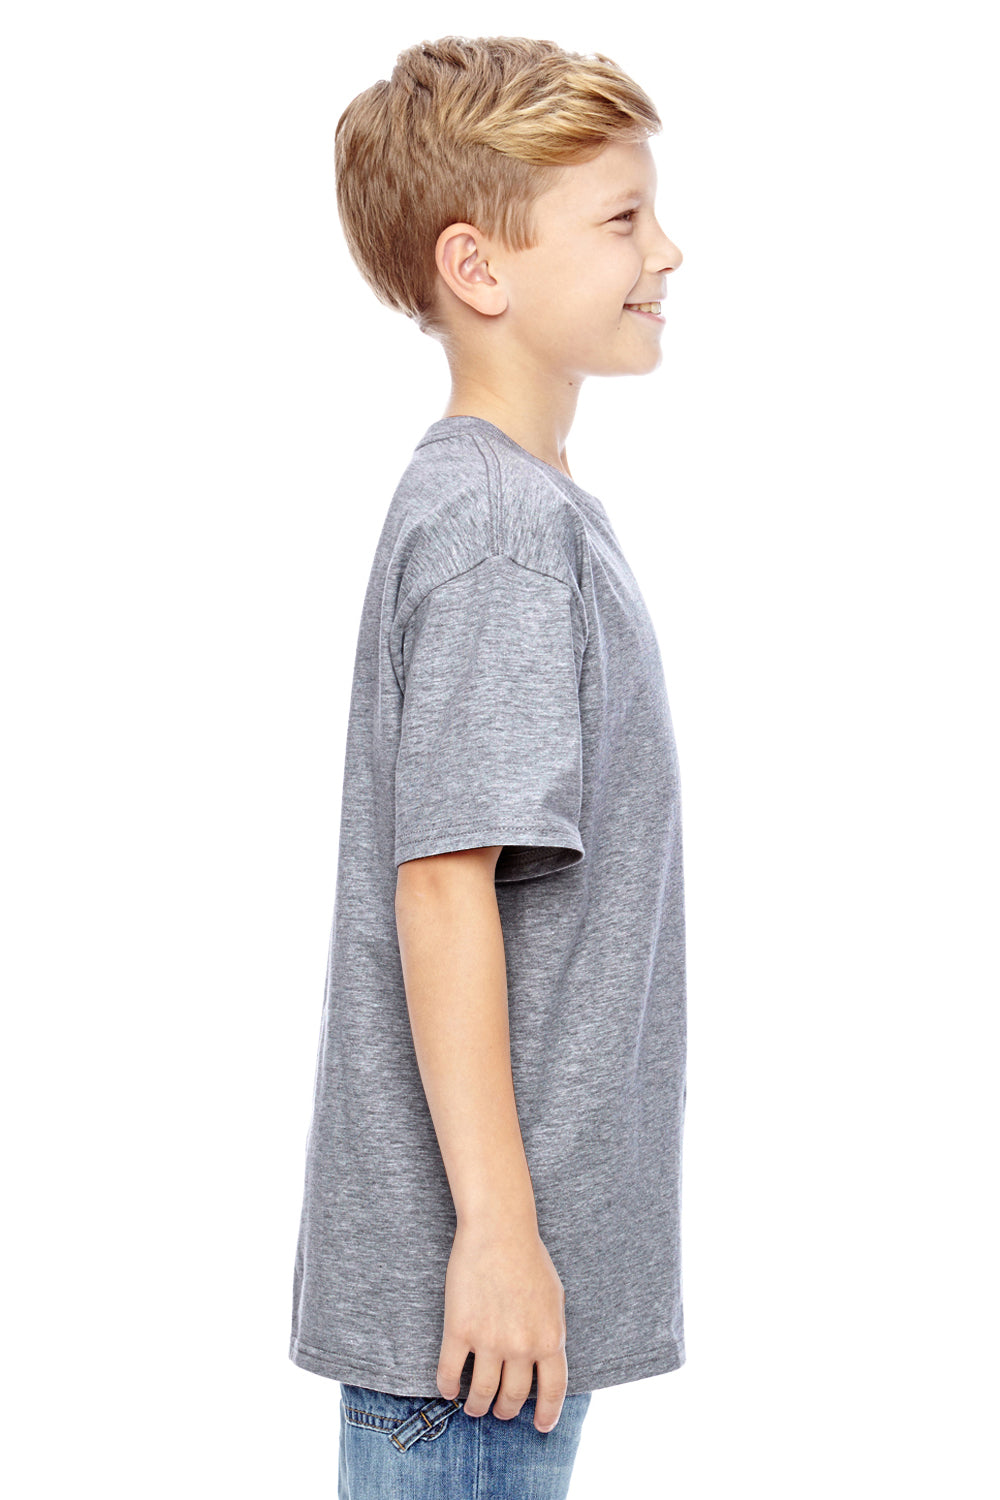 Hanes 498Y Youth Nano-T Short Sleeve Crewneck T-Shirt Light Steel Grey Side